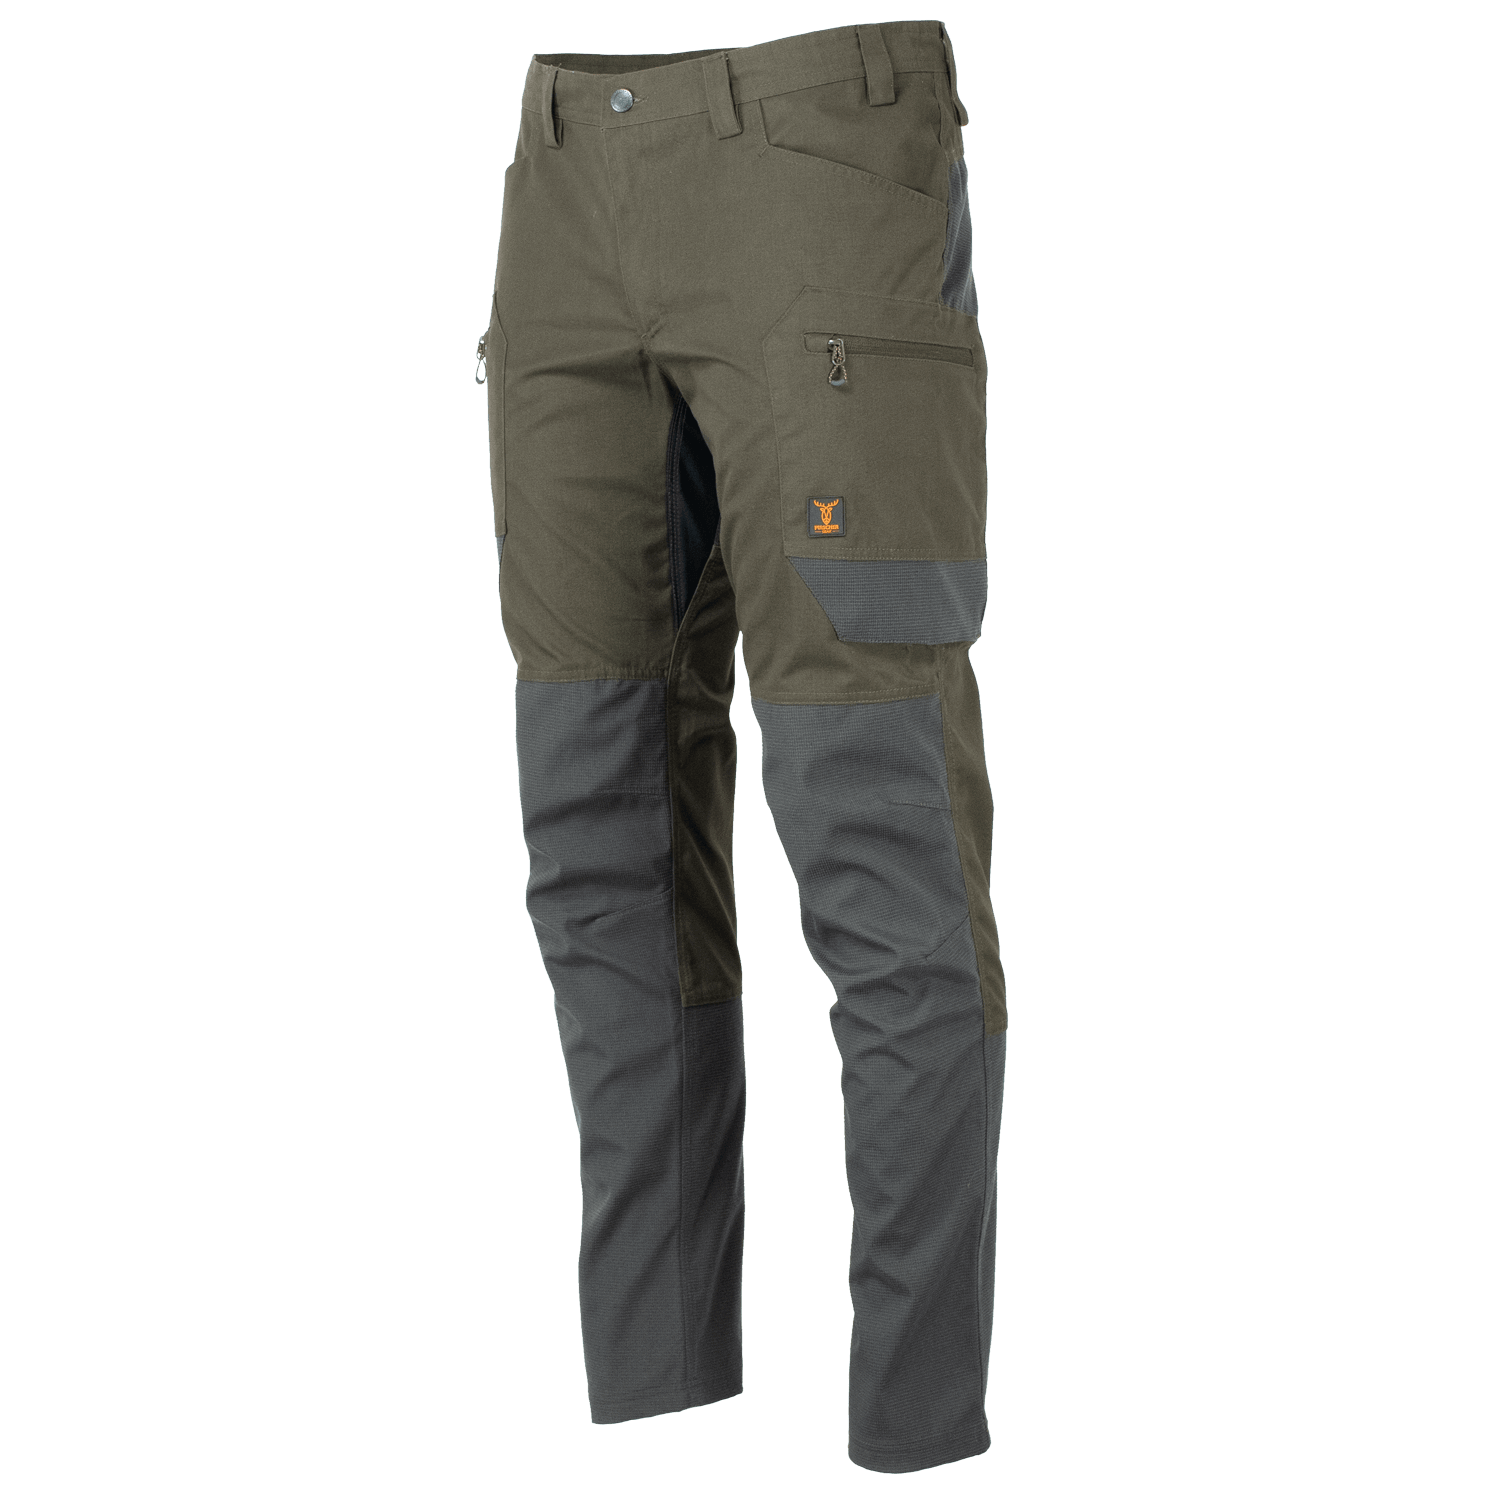 Pirscher Gear Rugged Hybrid Pants - Men's Hunting Clothing